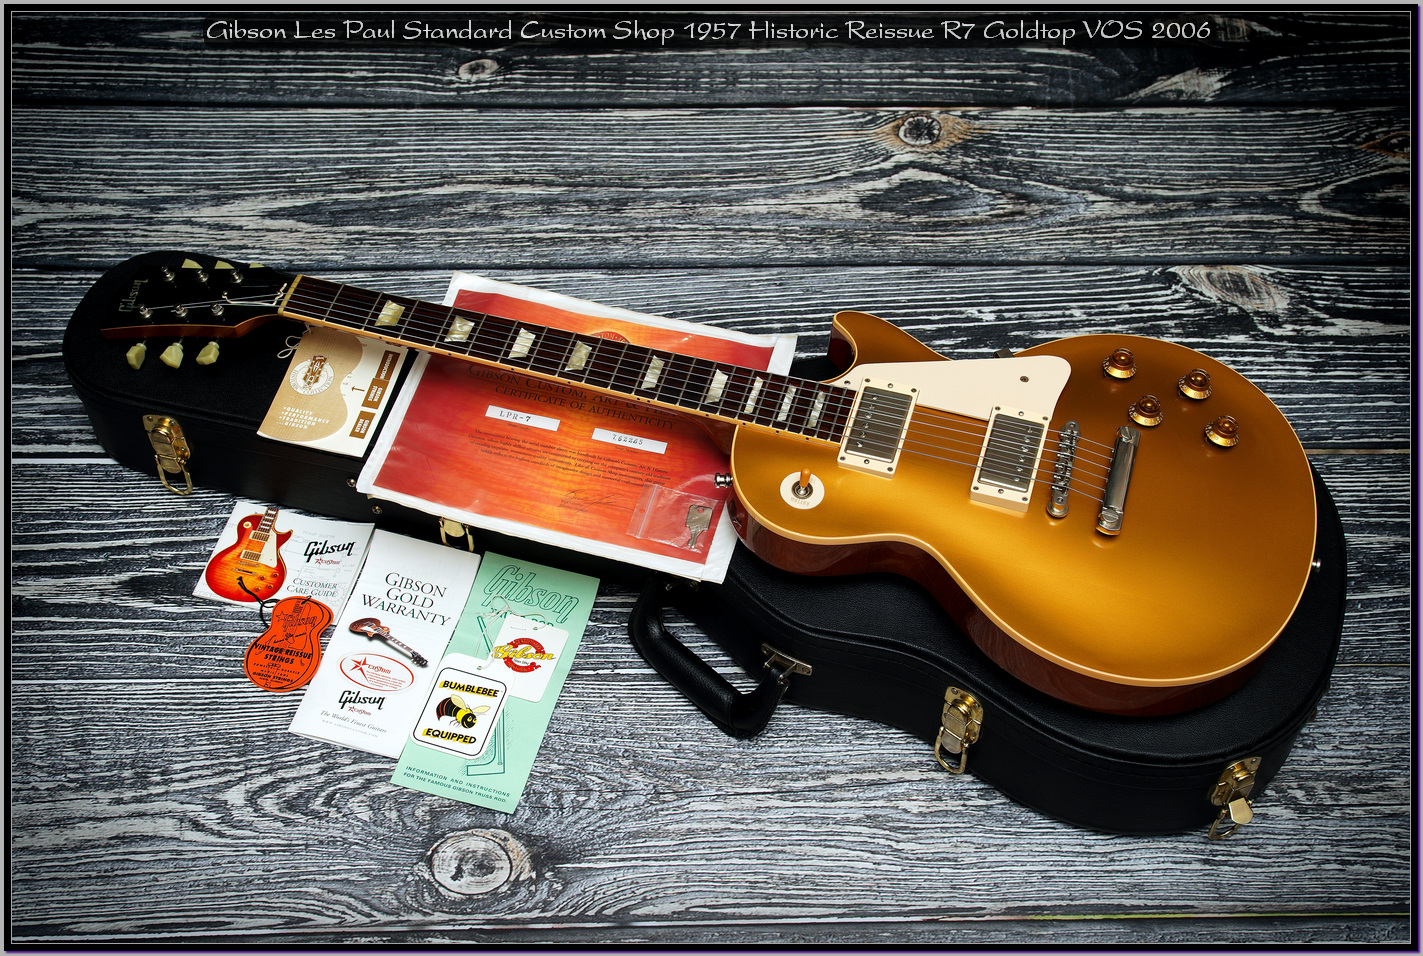 Gibson Les Paul Standard Custom Shop 1957 Historic Reissue R7 Goldtop VOS 2006 01A_x1400.jpg